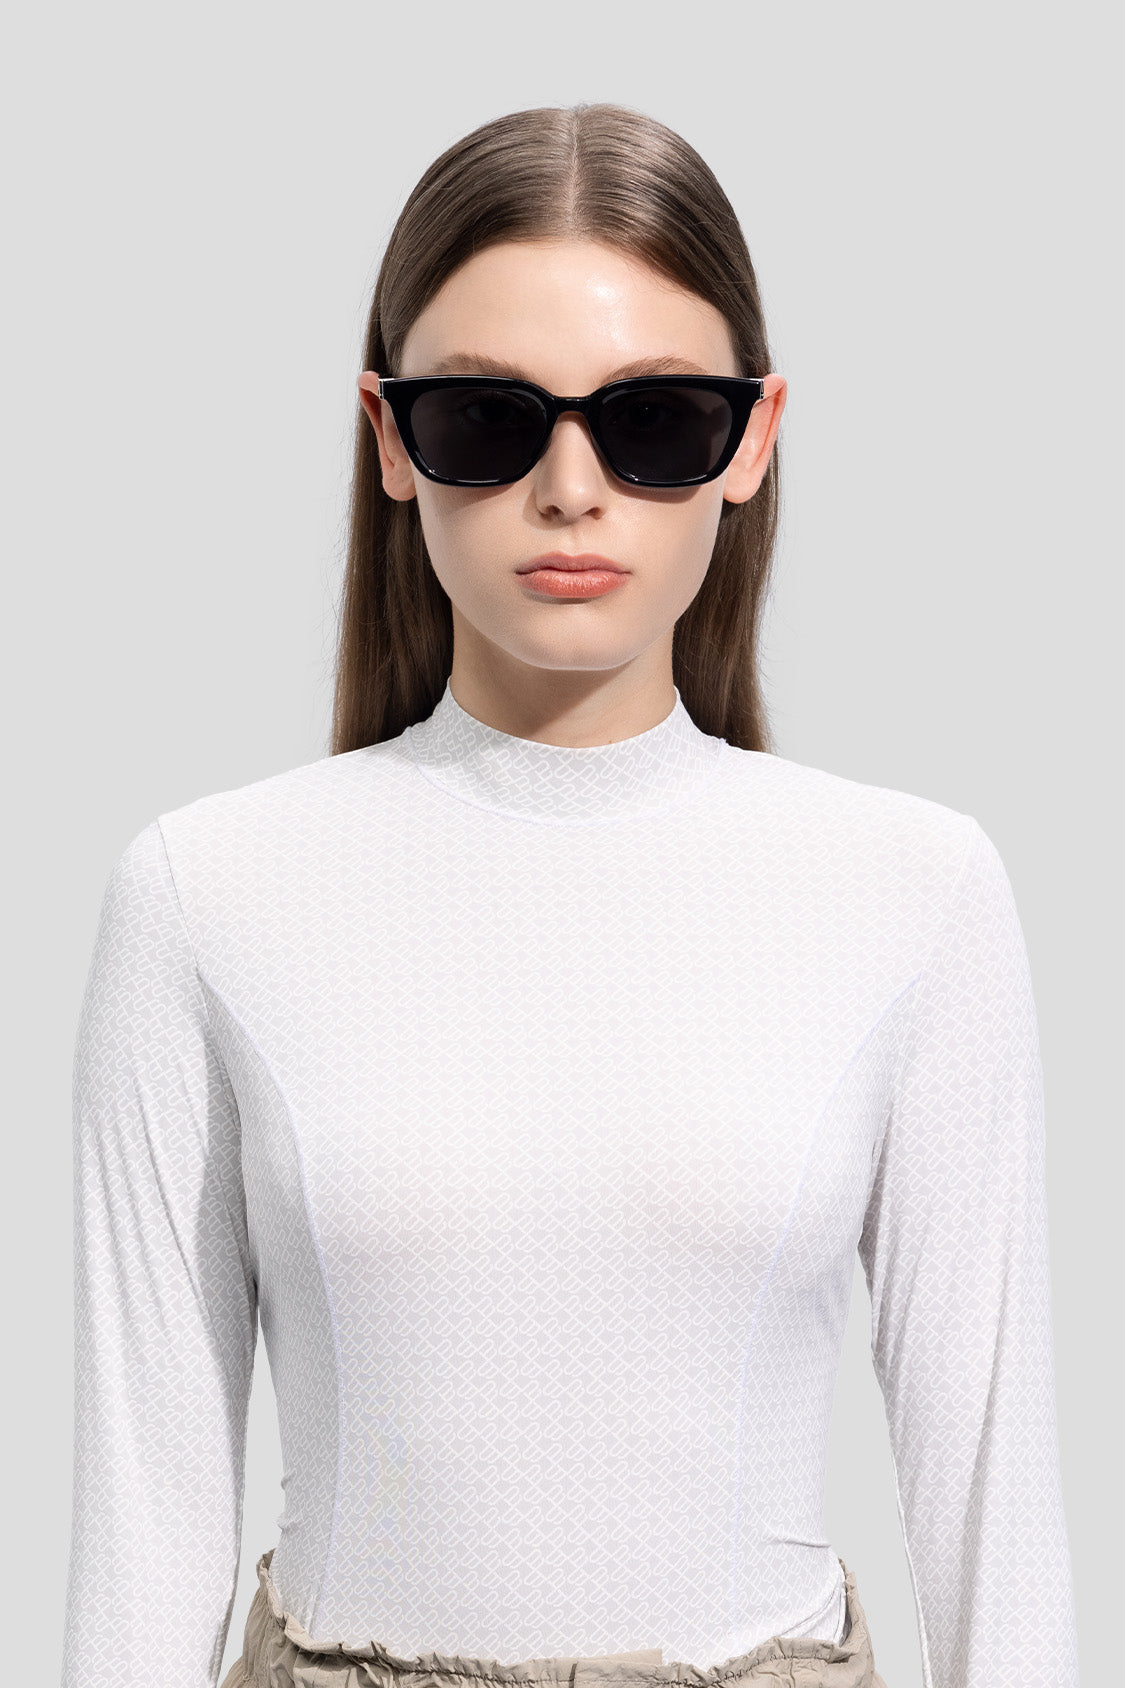 beneunder women's sunglasses foldable #color_black